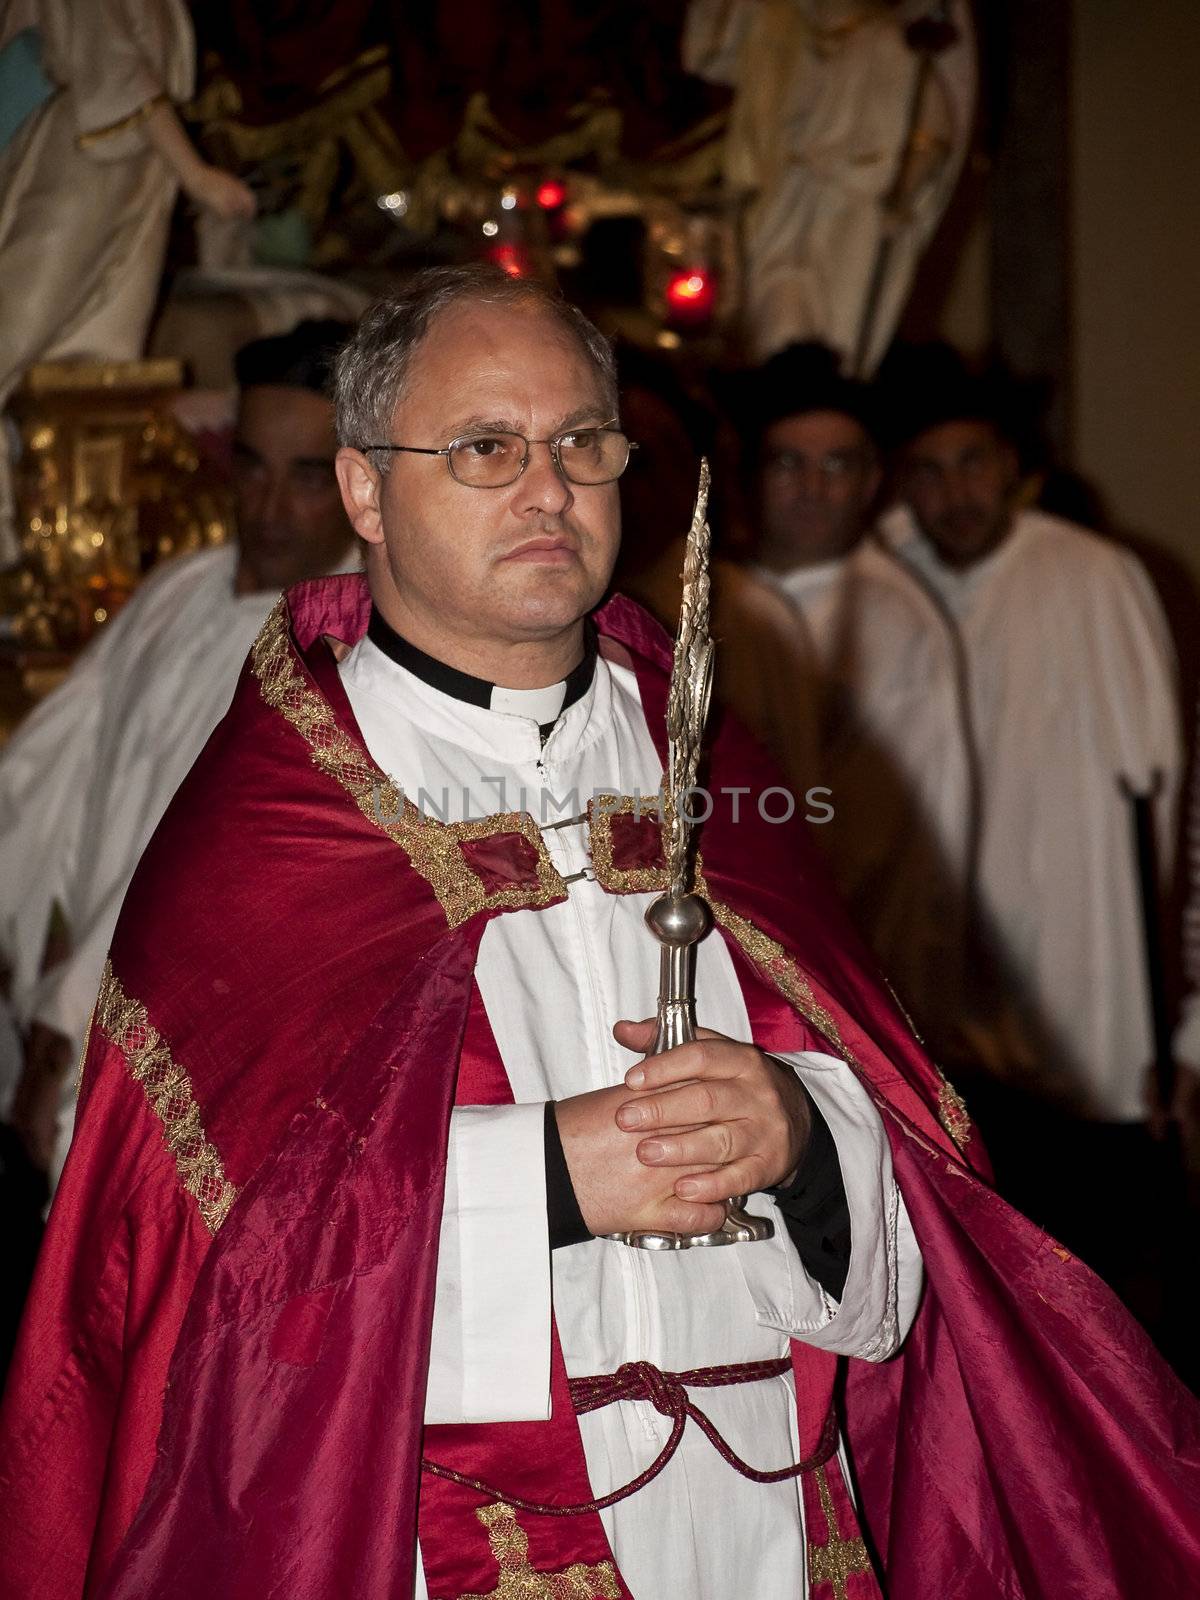 Parish Priest by PhotoWorks